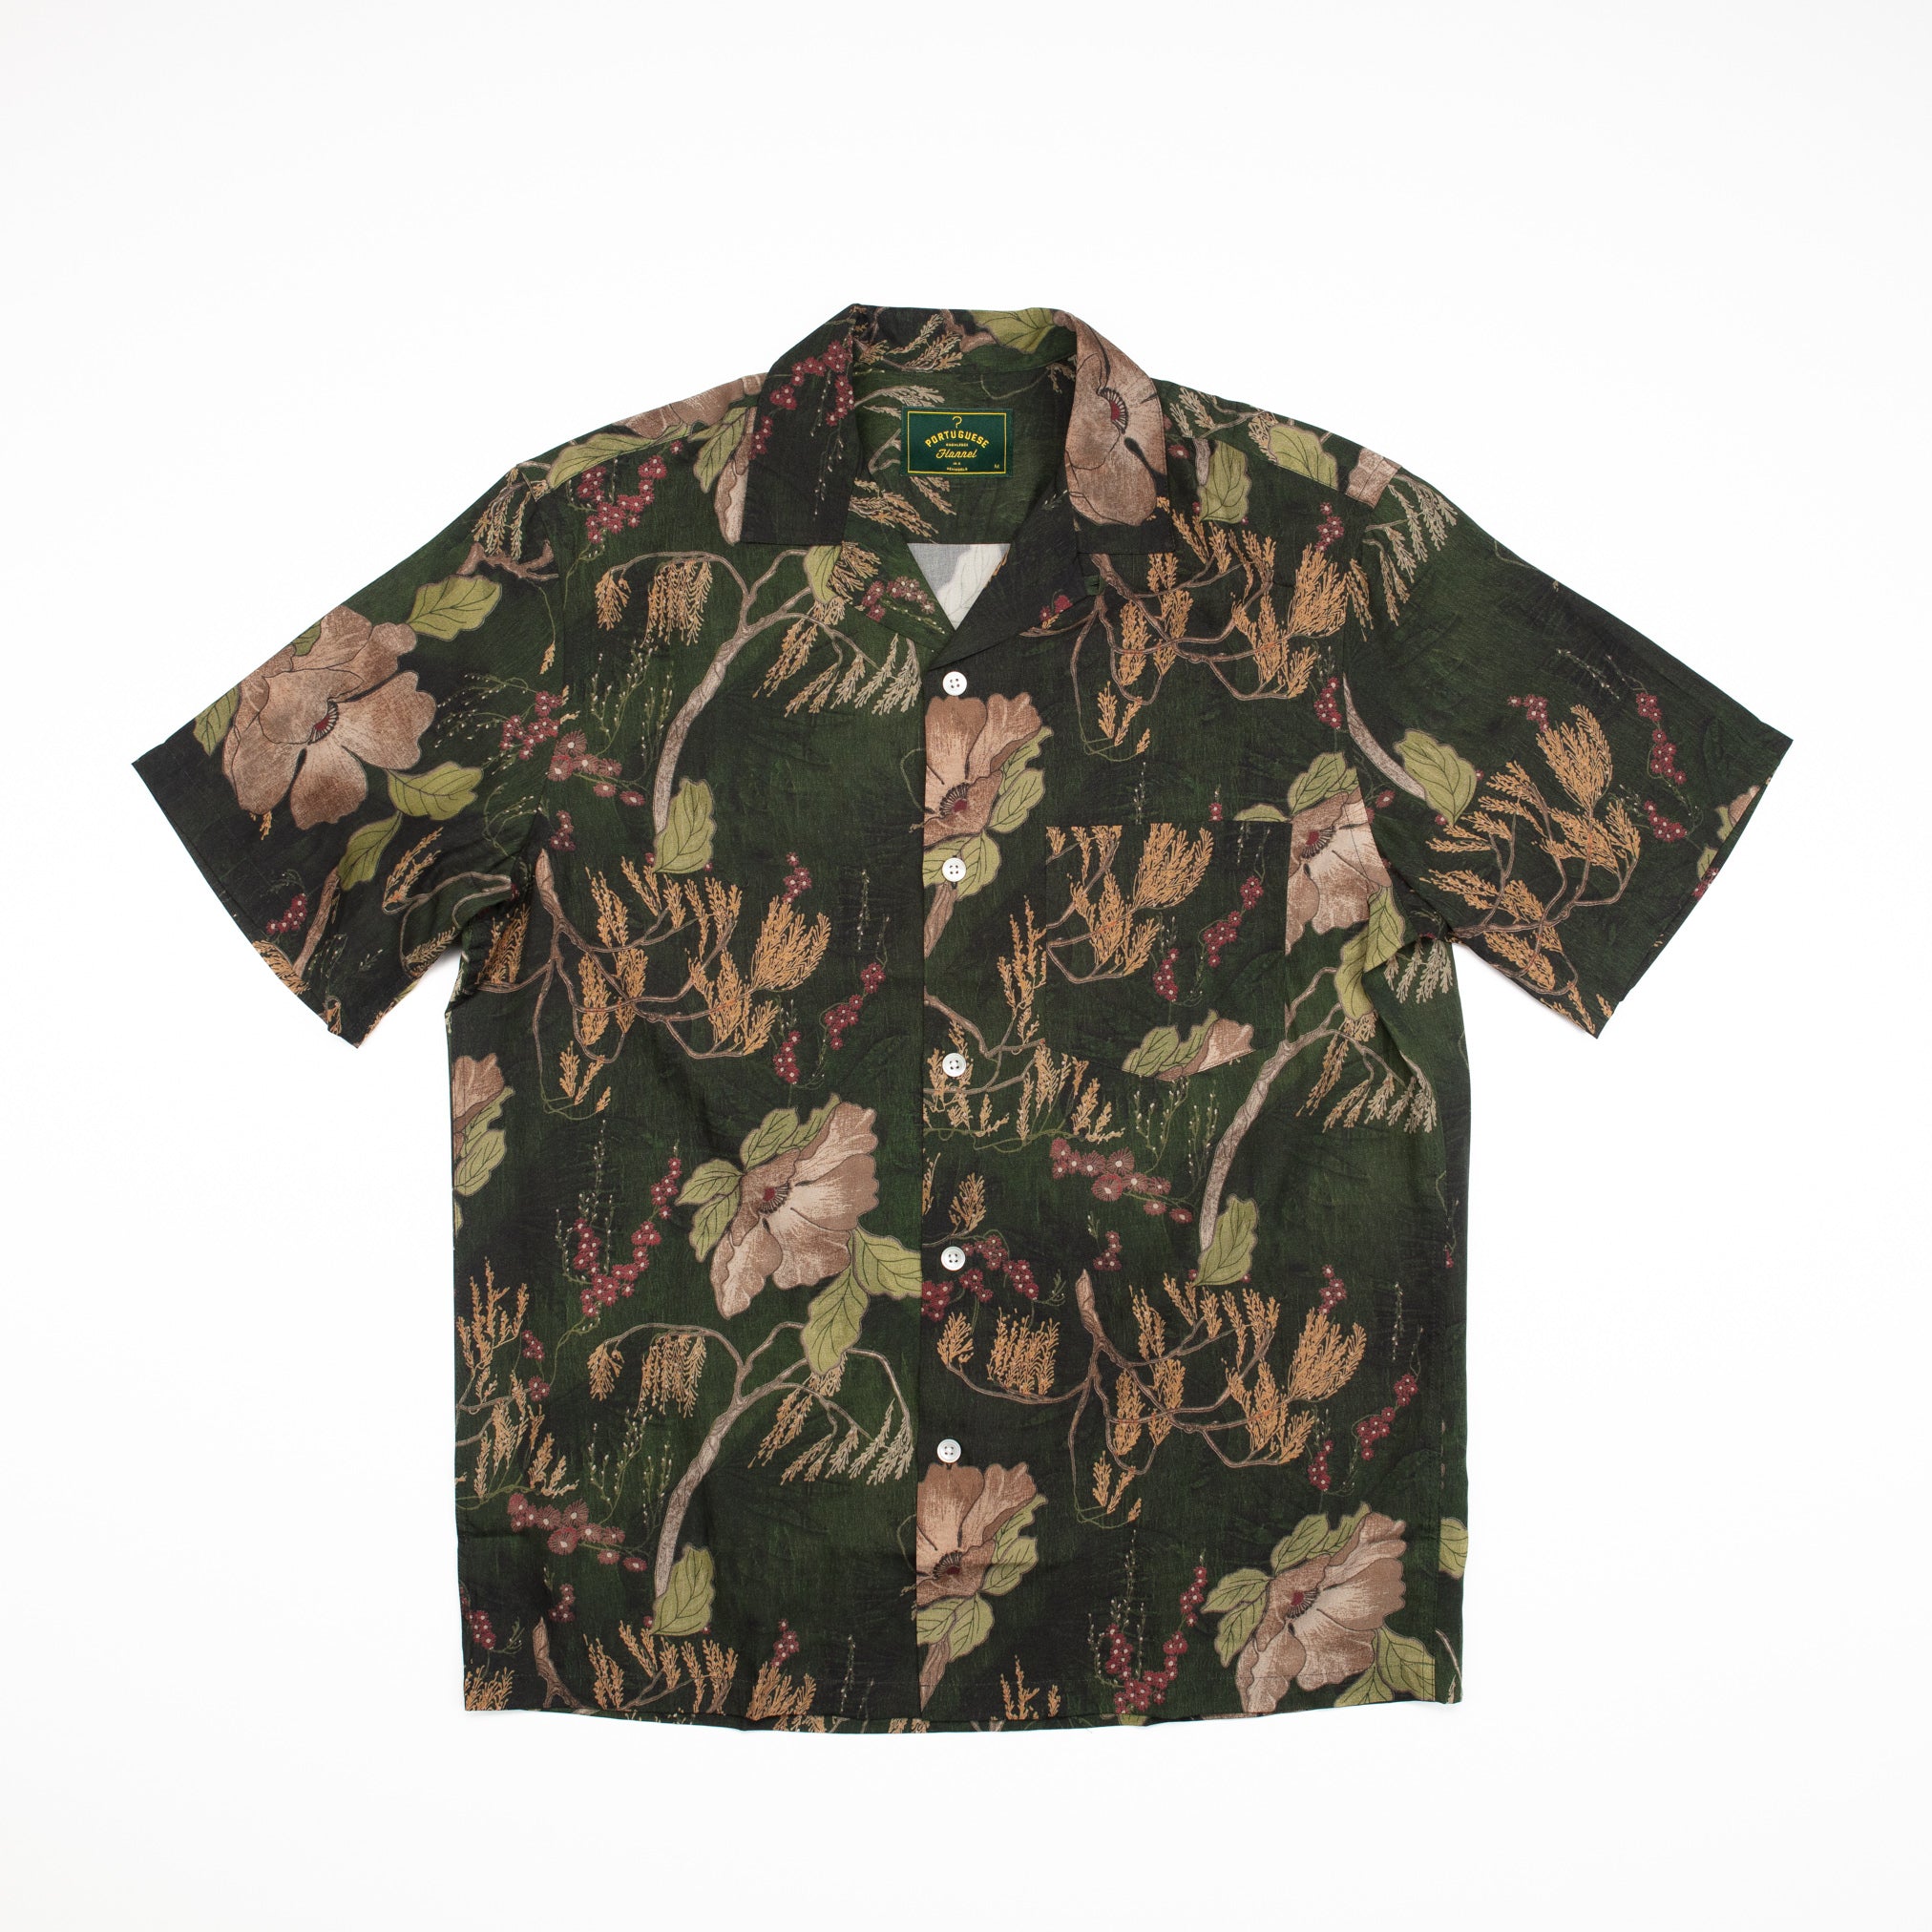 The Ambar Shirt in Tropical Green